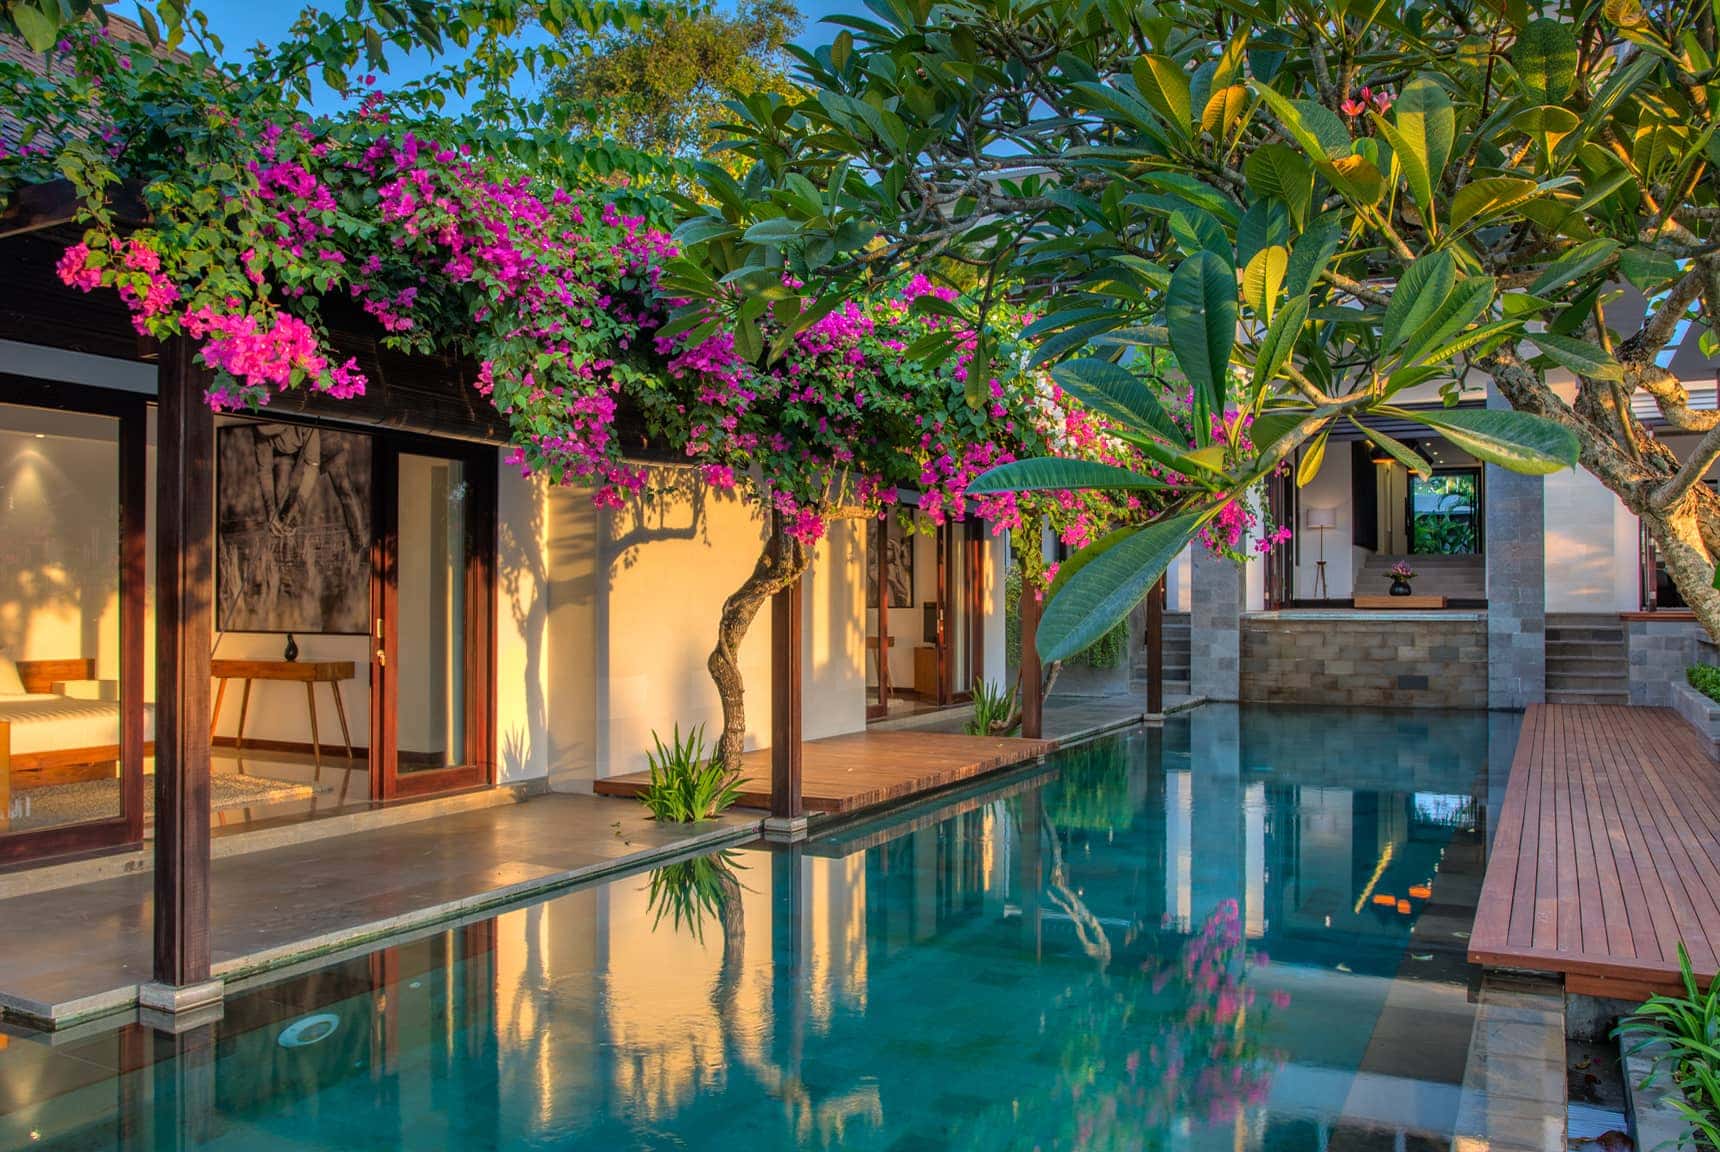 Villa Lantana - Jimbaran, Bali Indonesia (Bali villa photography by master photographer Rick Carmichael of LuxViz)